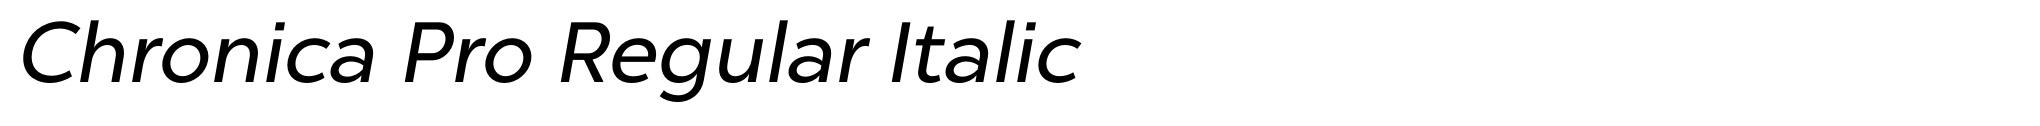 Chronica Pro Regular Italic image